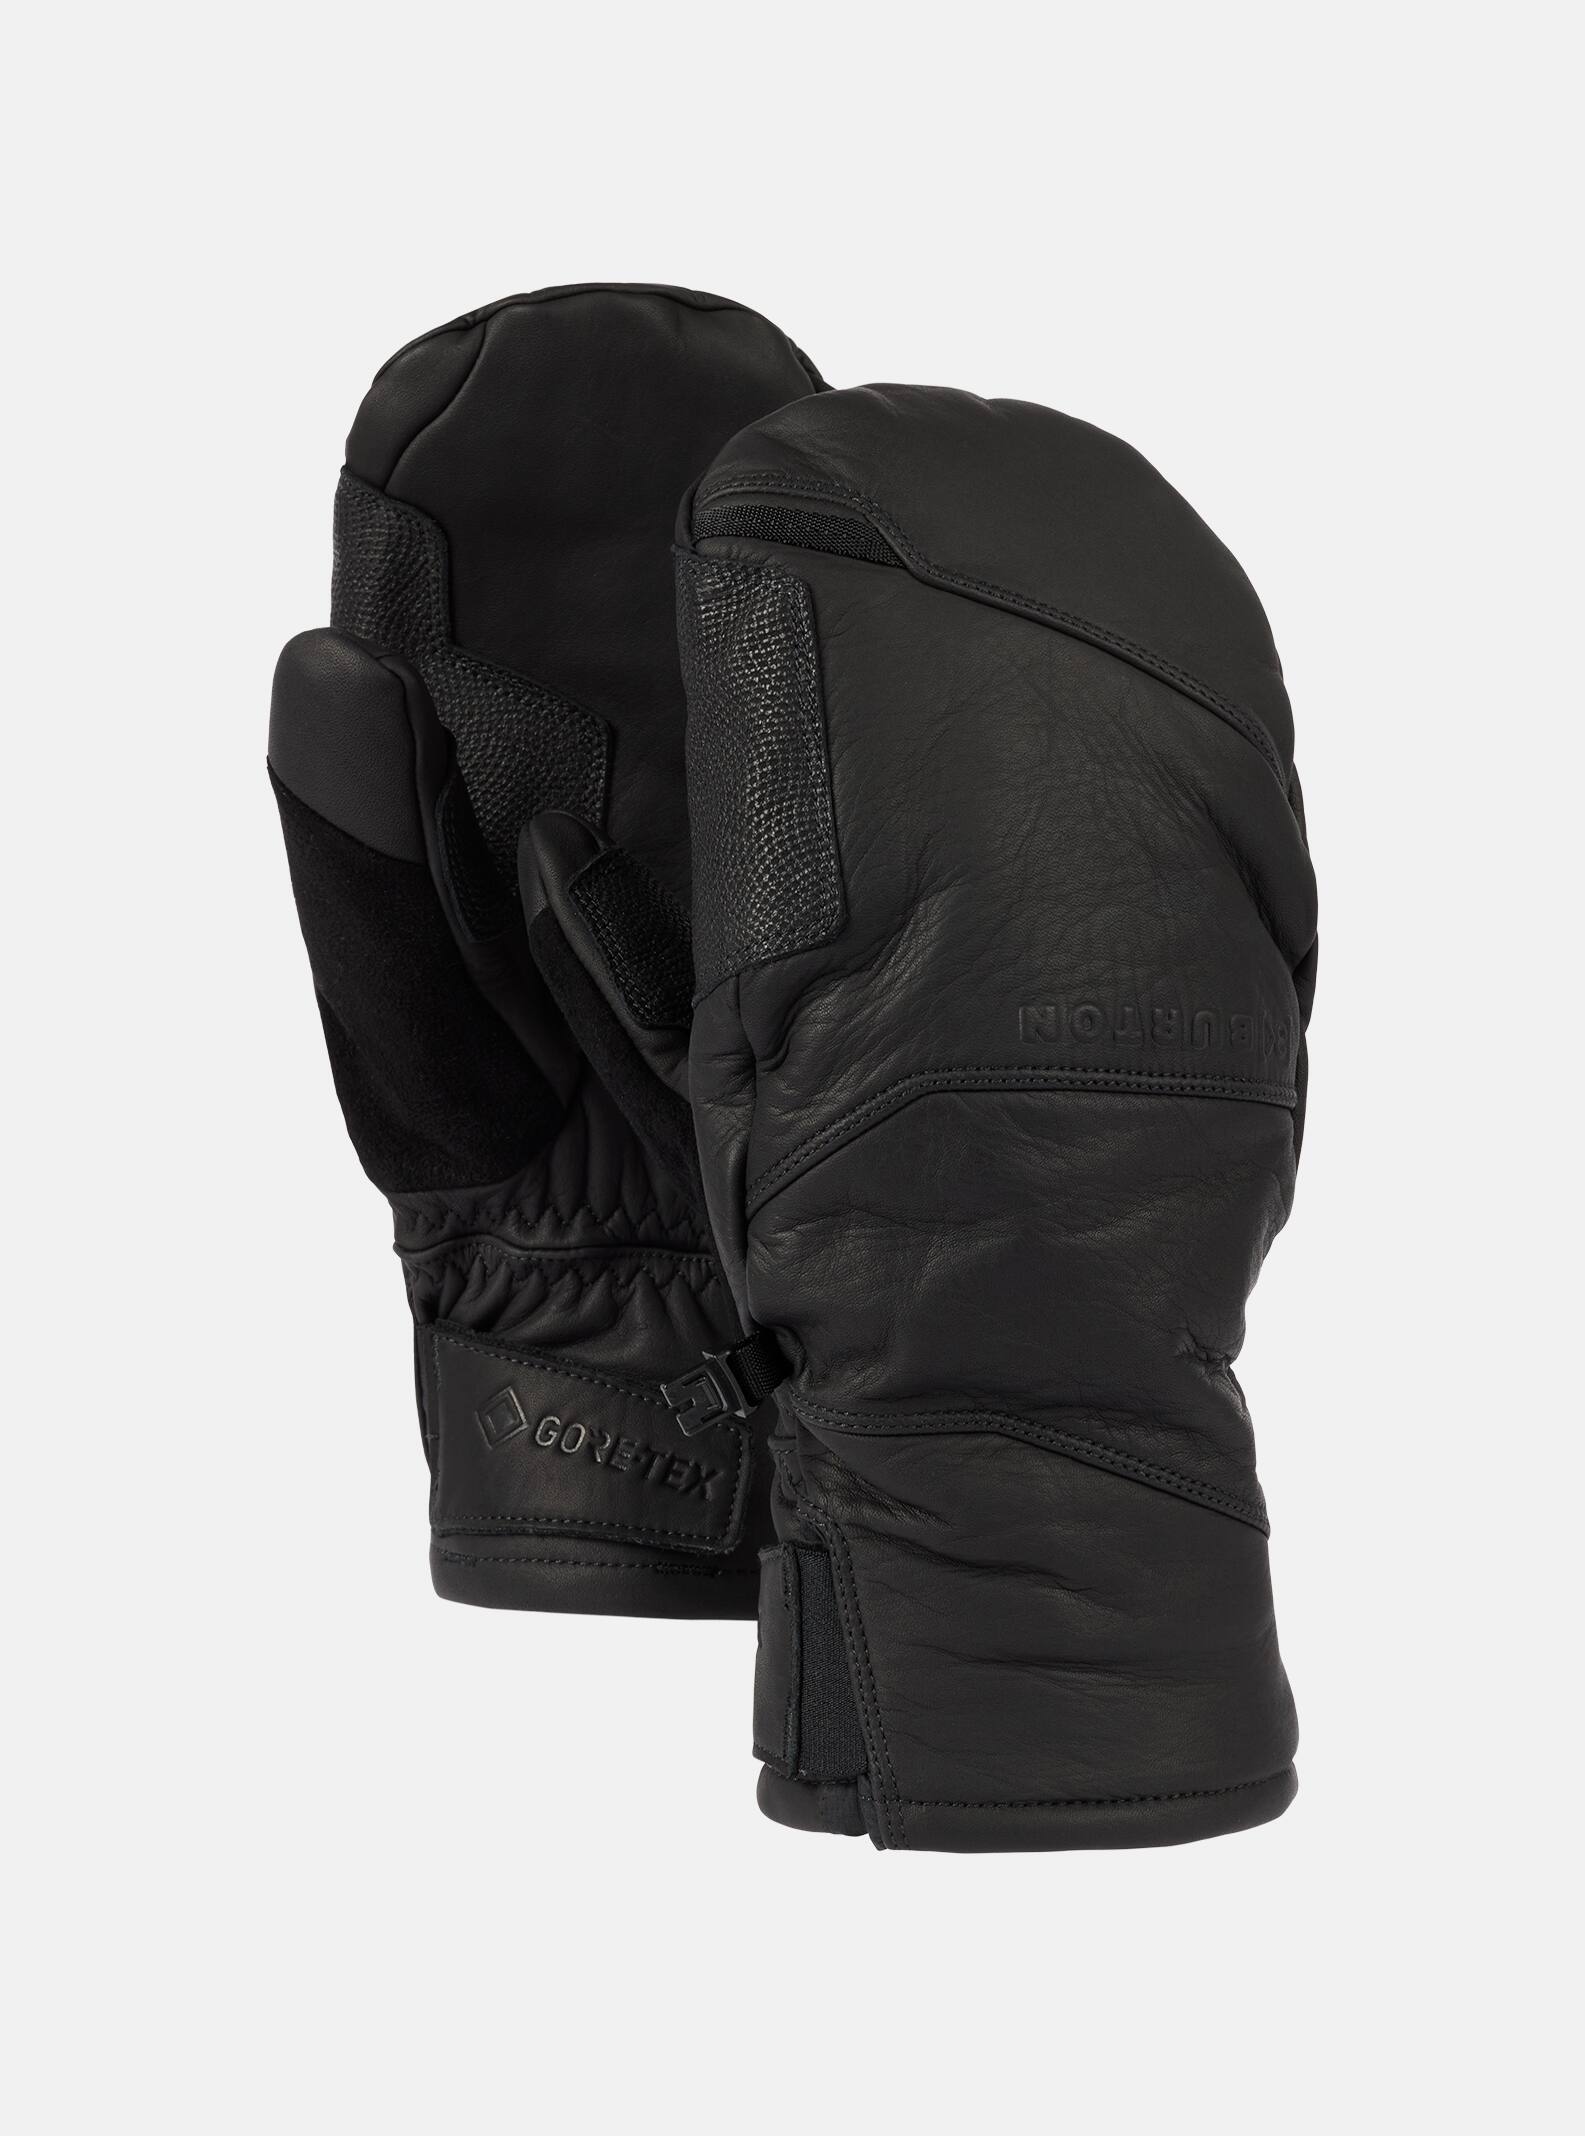 Burton [ak] Clutch GORE-TEX Leather Mittens, XL